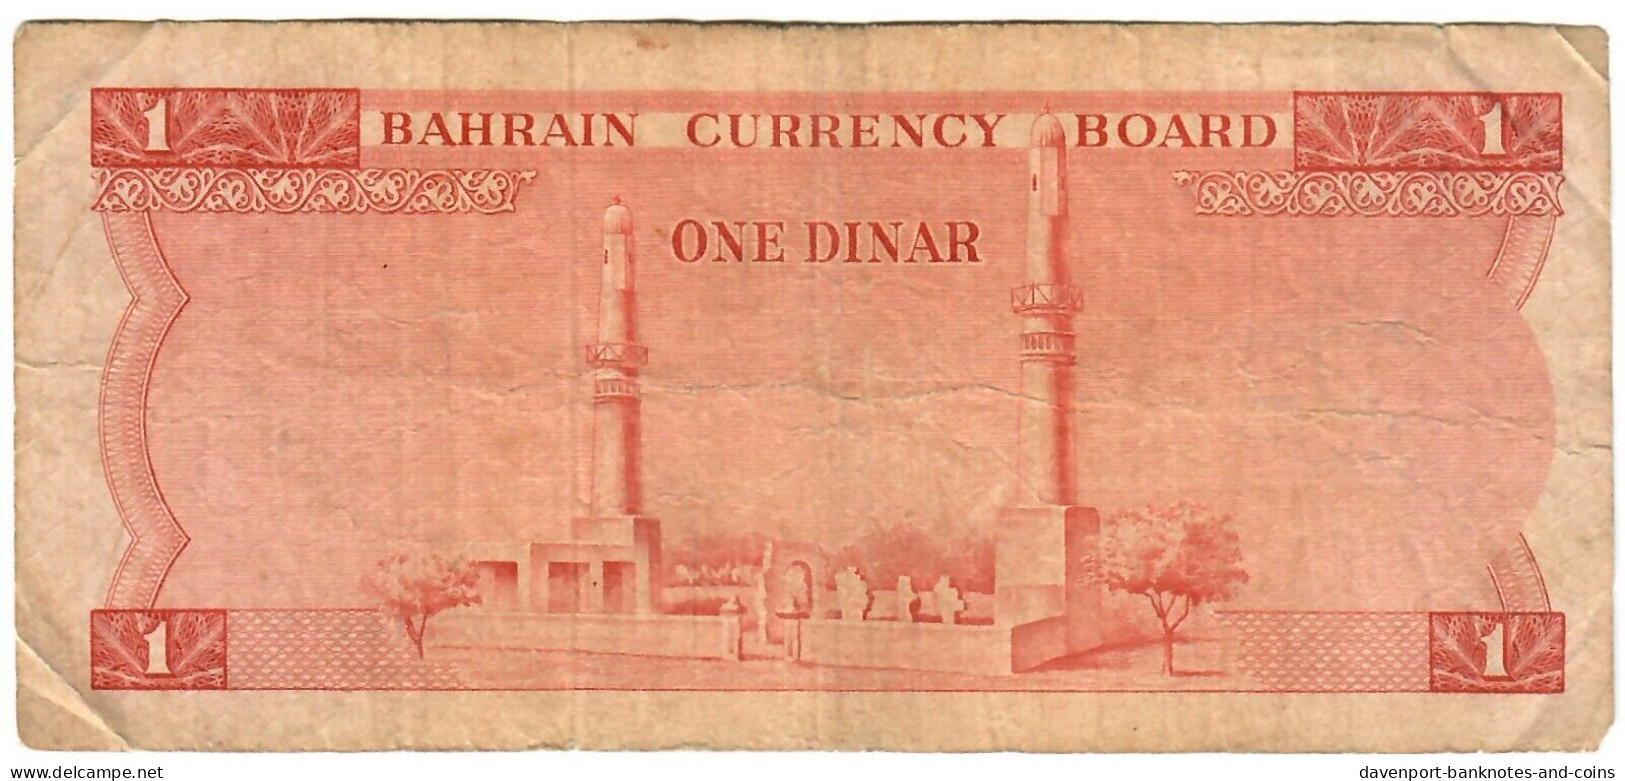 Bahrain 1 Dinar 1965 VG - Bahrain